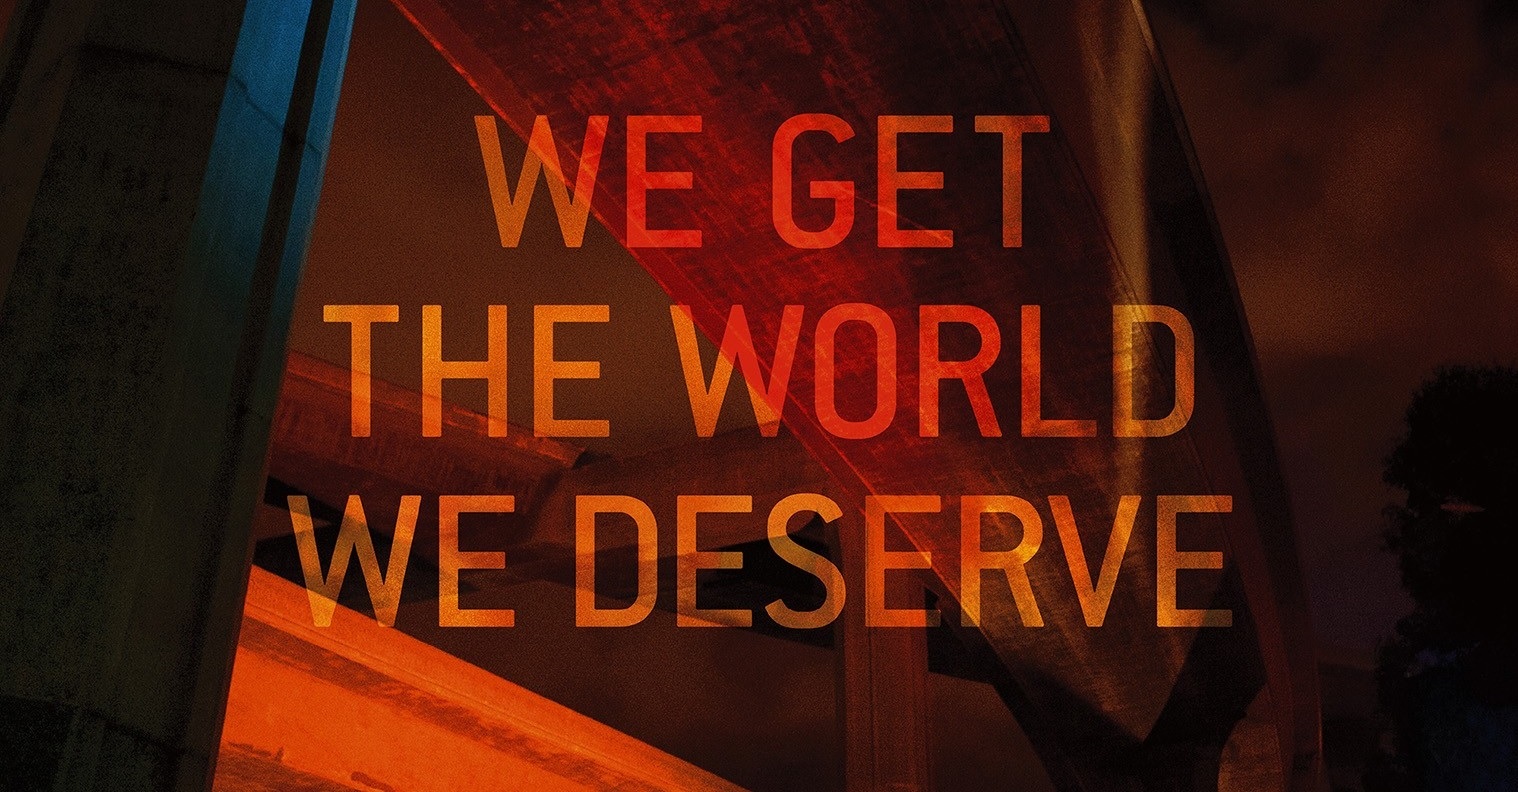 True-Detective-Season-2-Poster-We-Get-the-World-We-Deserve-slice